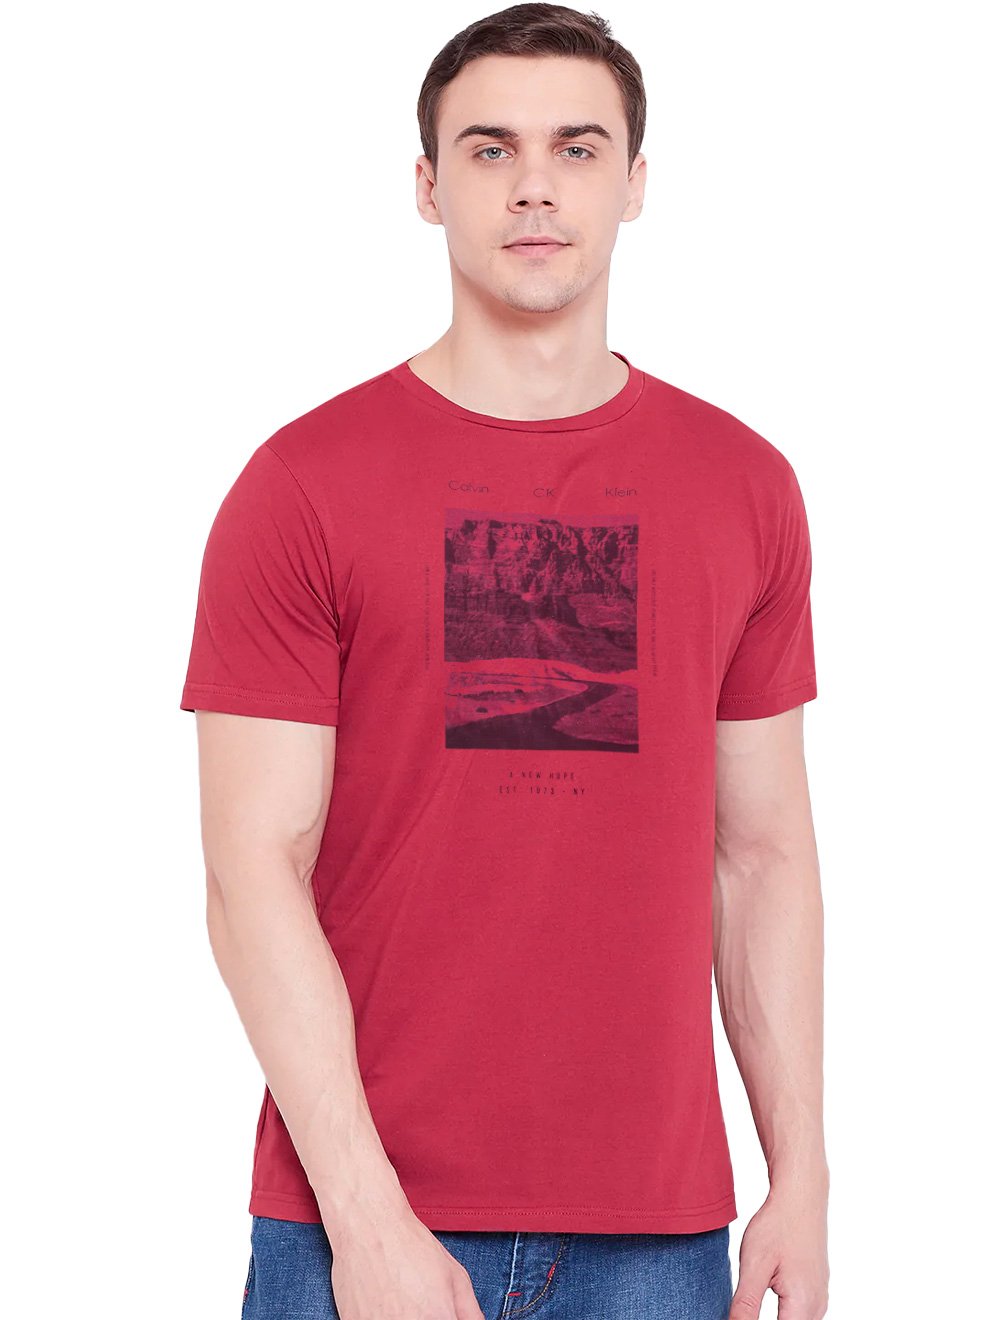 Camiseta Calvin Klein Masculina A New Hope Journey Valley Vermelha